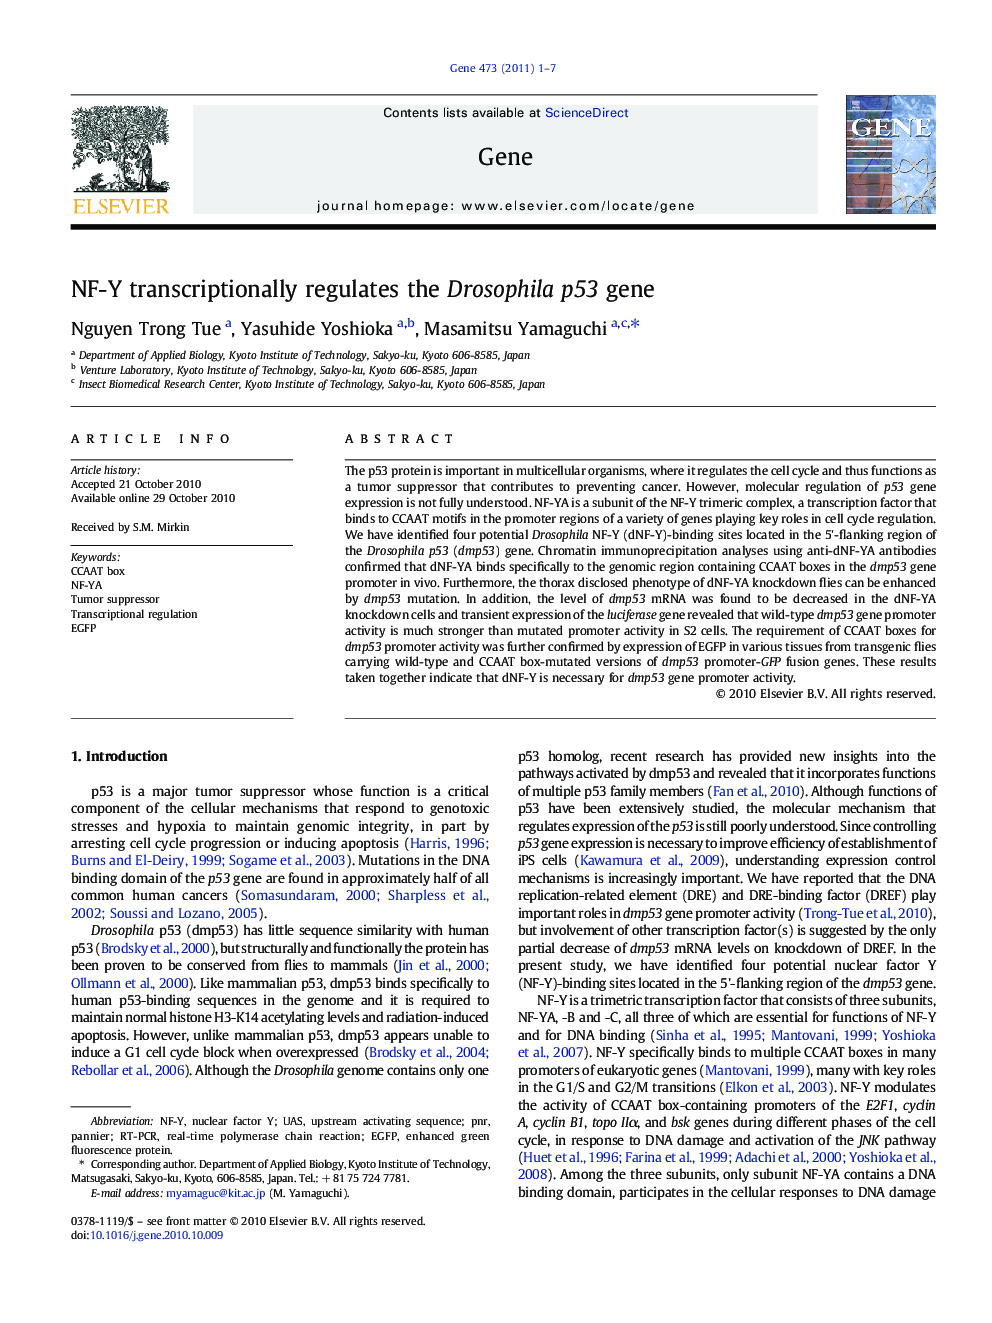 NF-Y transcriptionally regulates the Drosophila p53 gene